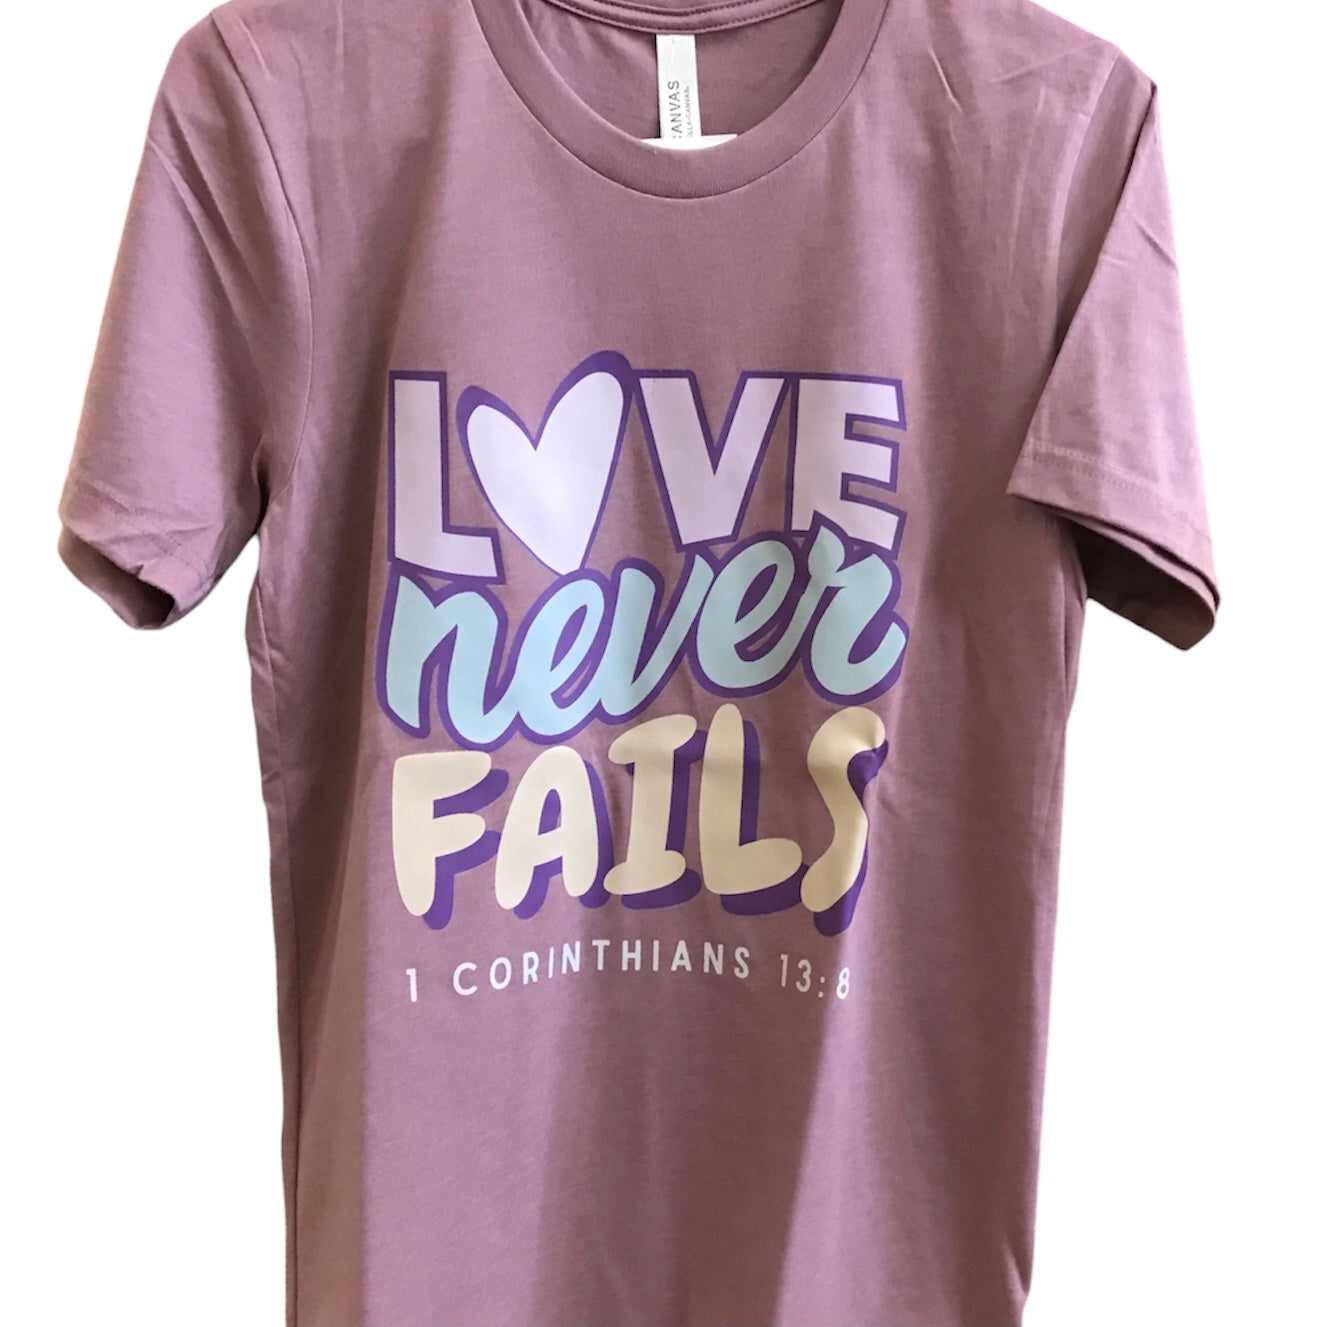 Simply Jess Designs | LOVE NEVER FAILS Tee